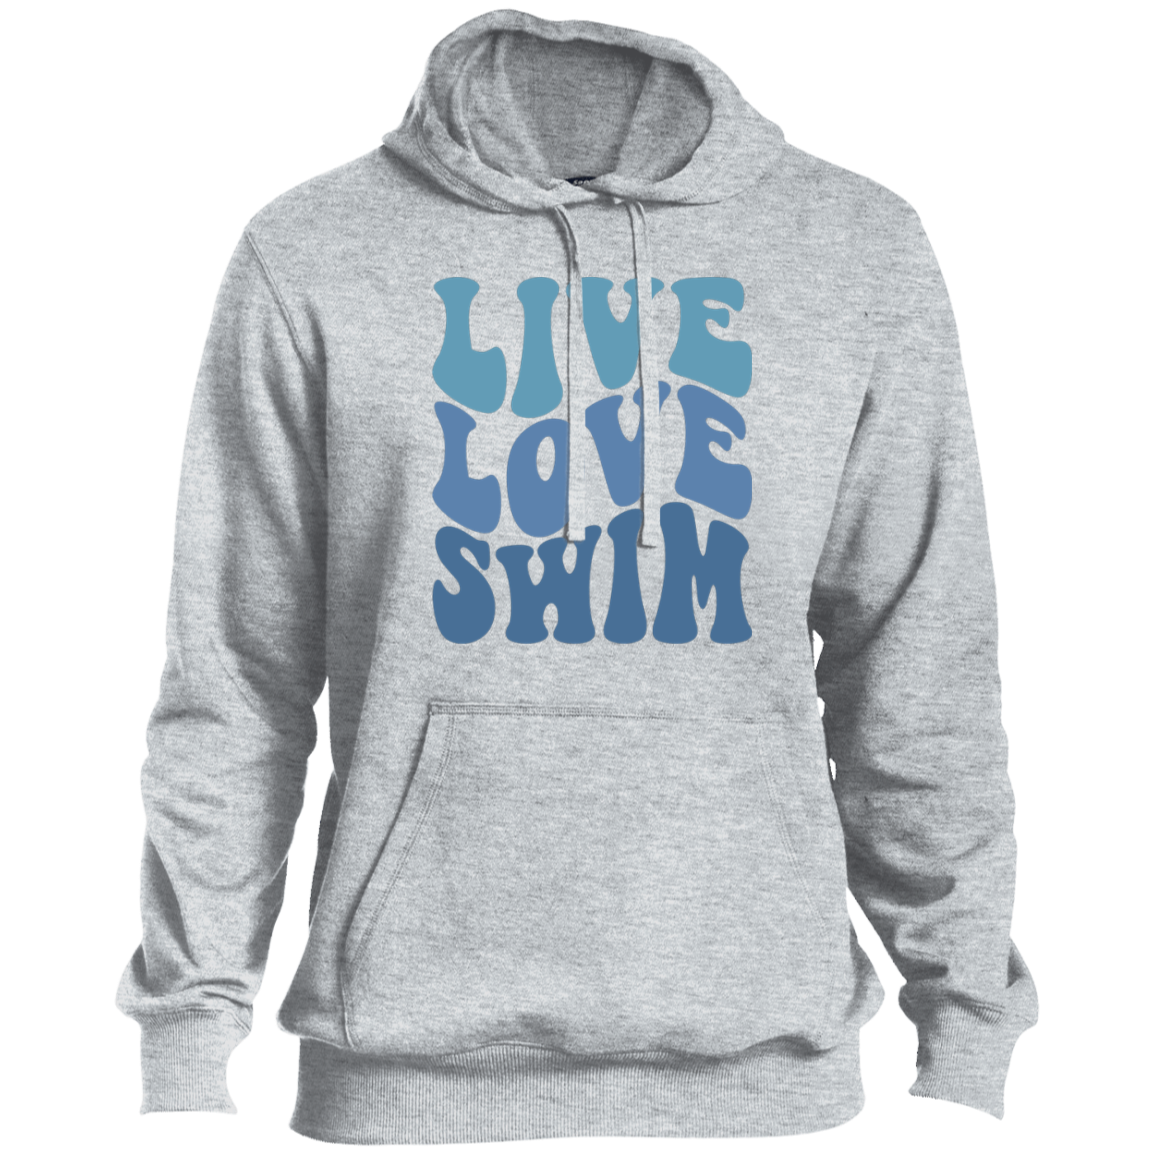 Live, Love, Swim- Pullover Hoodie